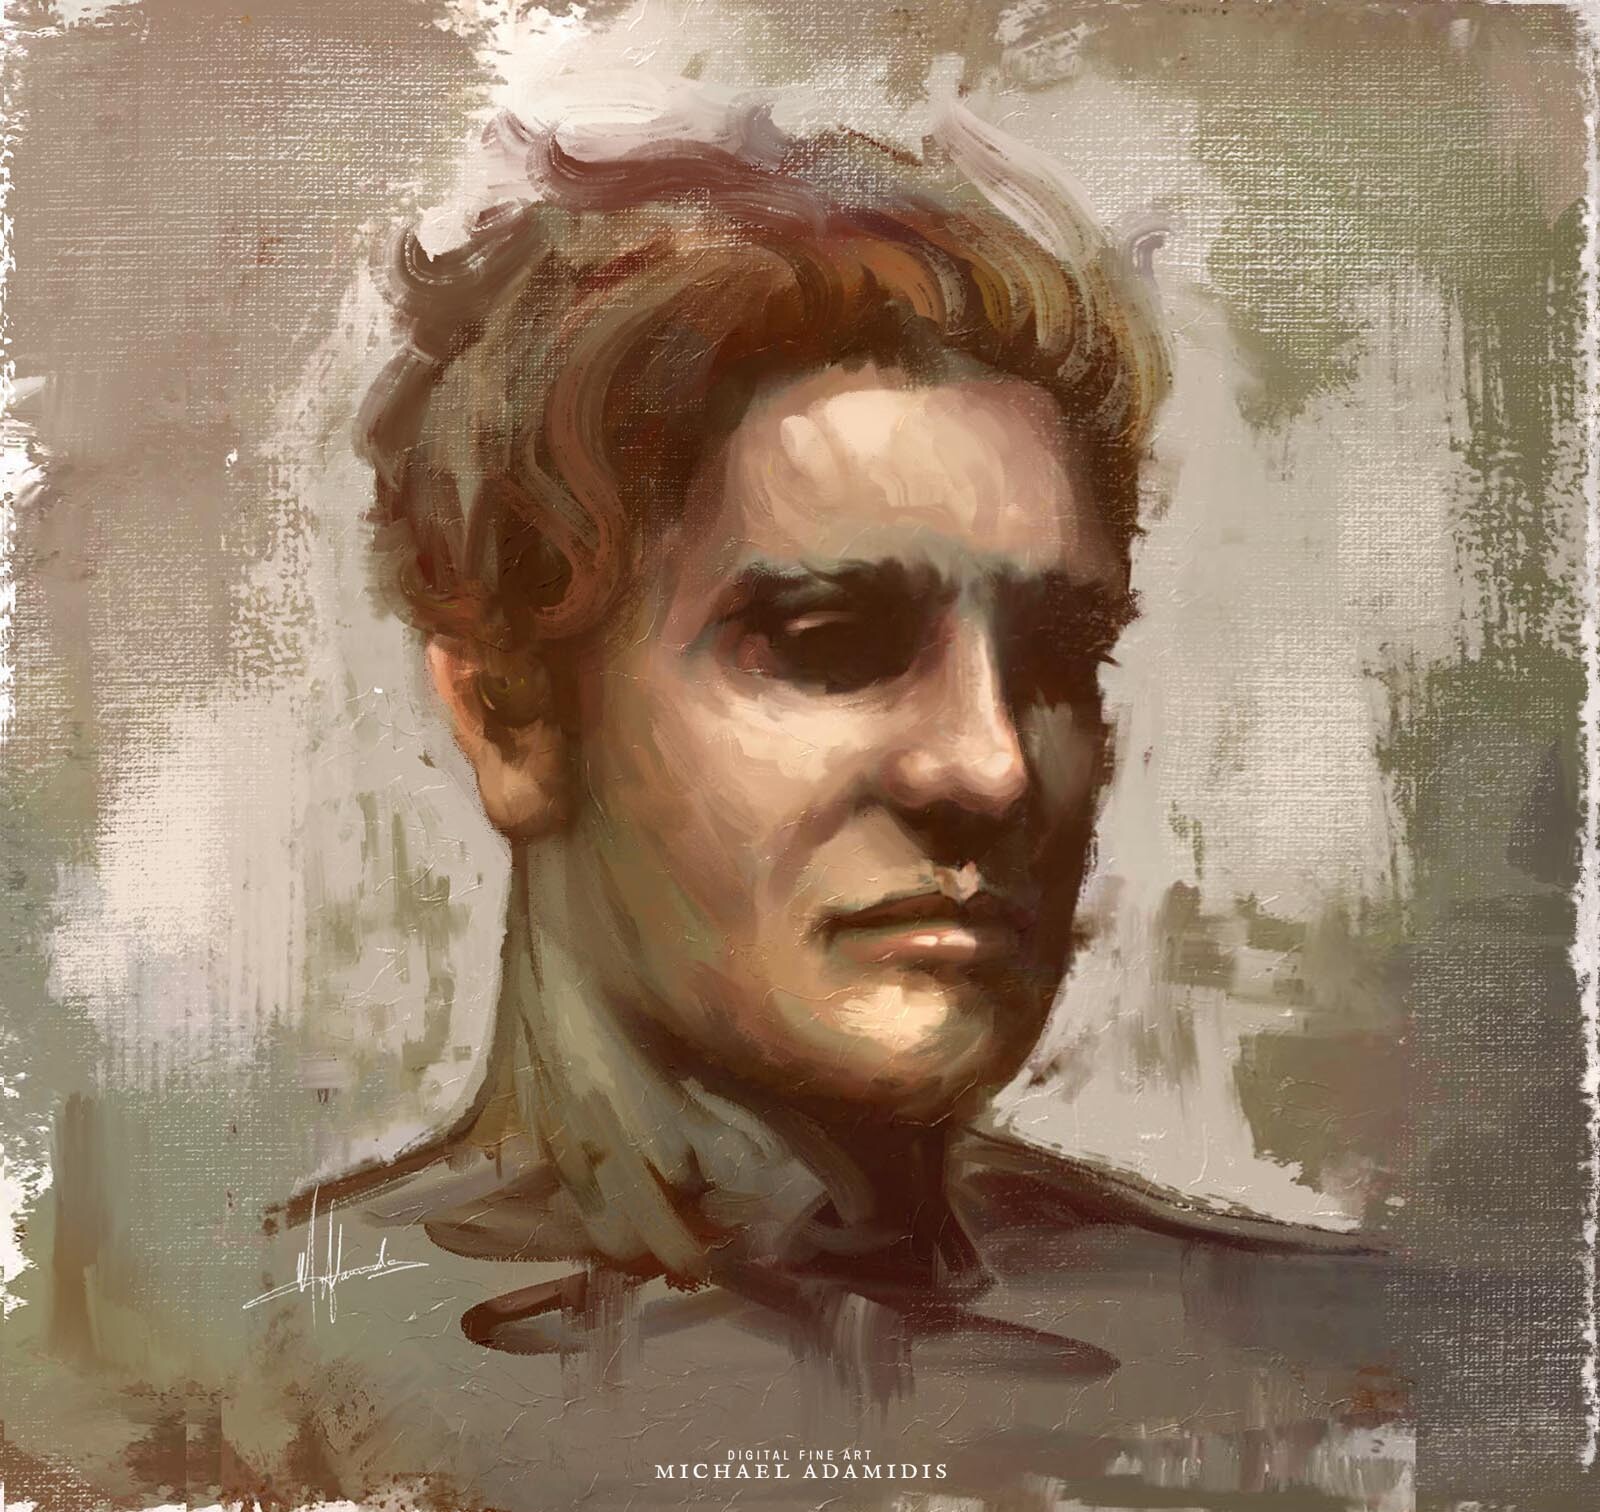 Digital Portrait Painting - loose, artistic style